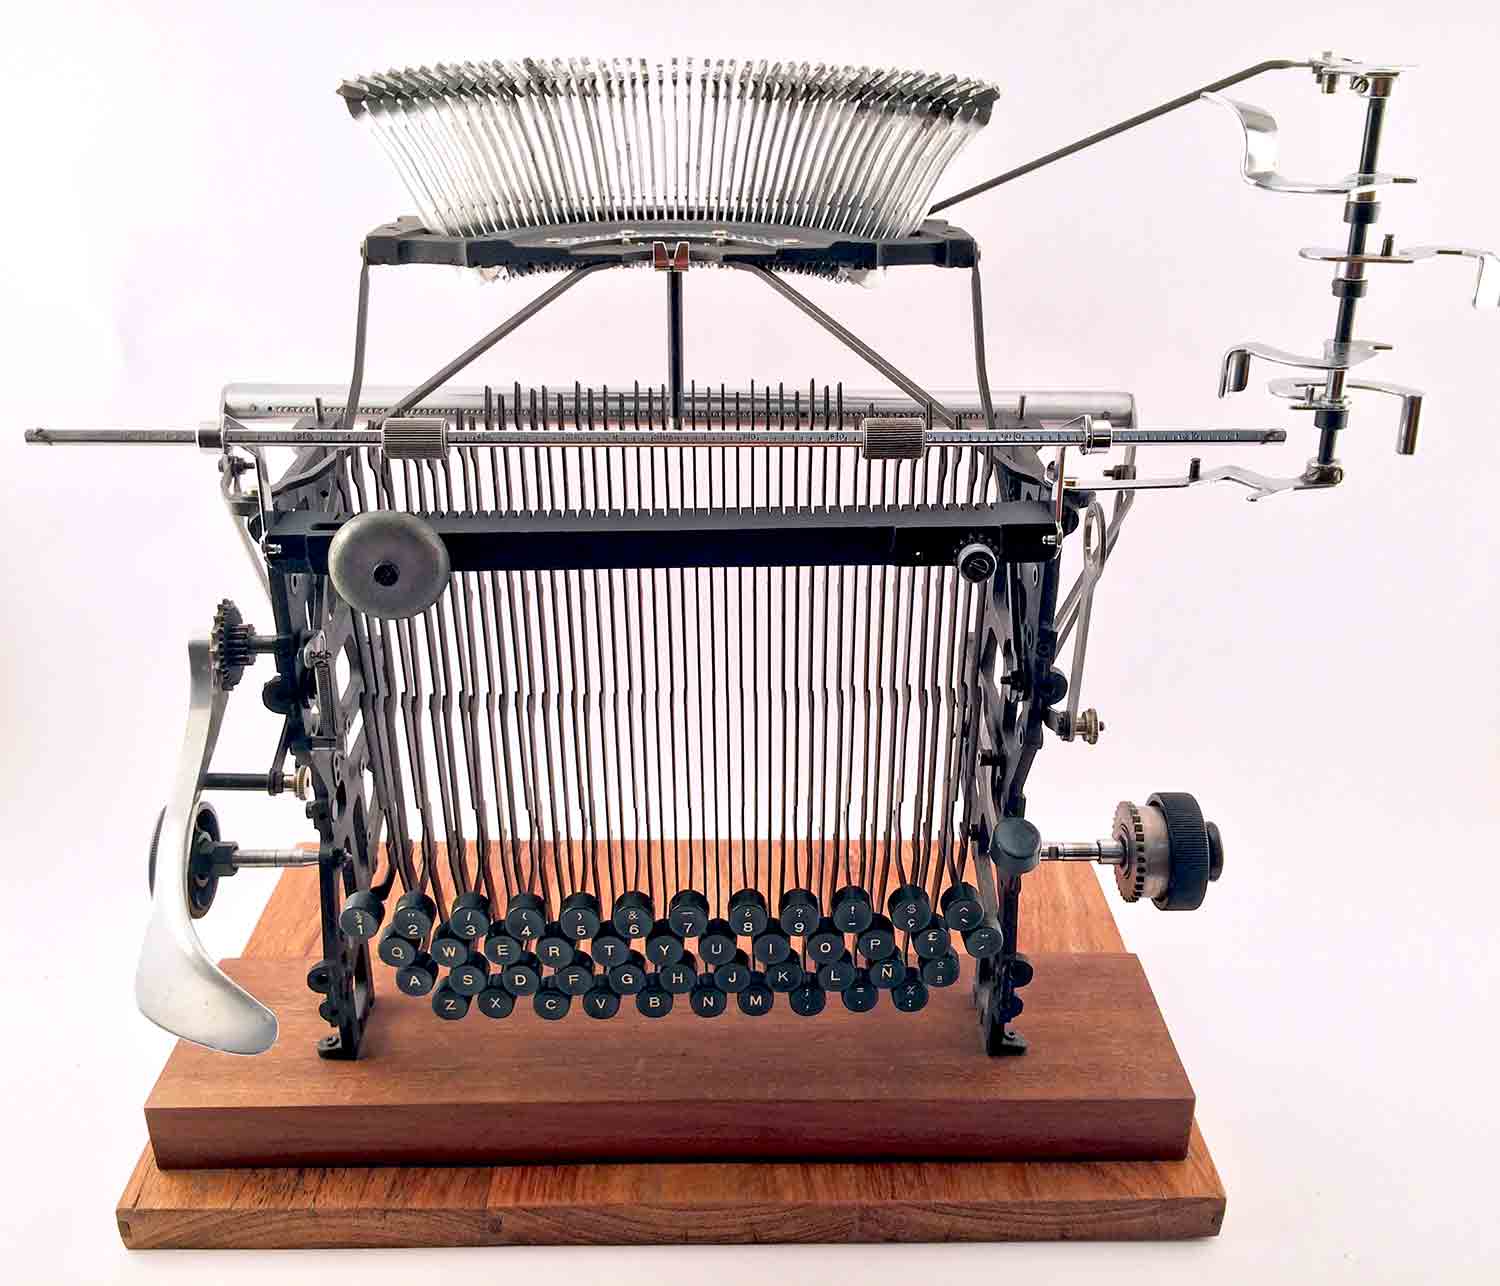 Sculpture of an interpretation of an Olivetti Lexicon 80 writing machine